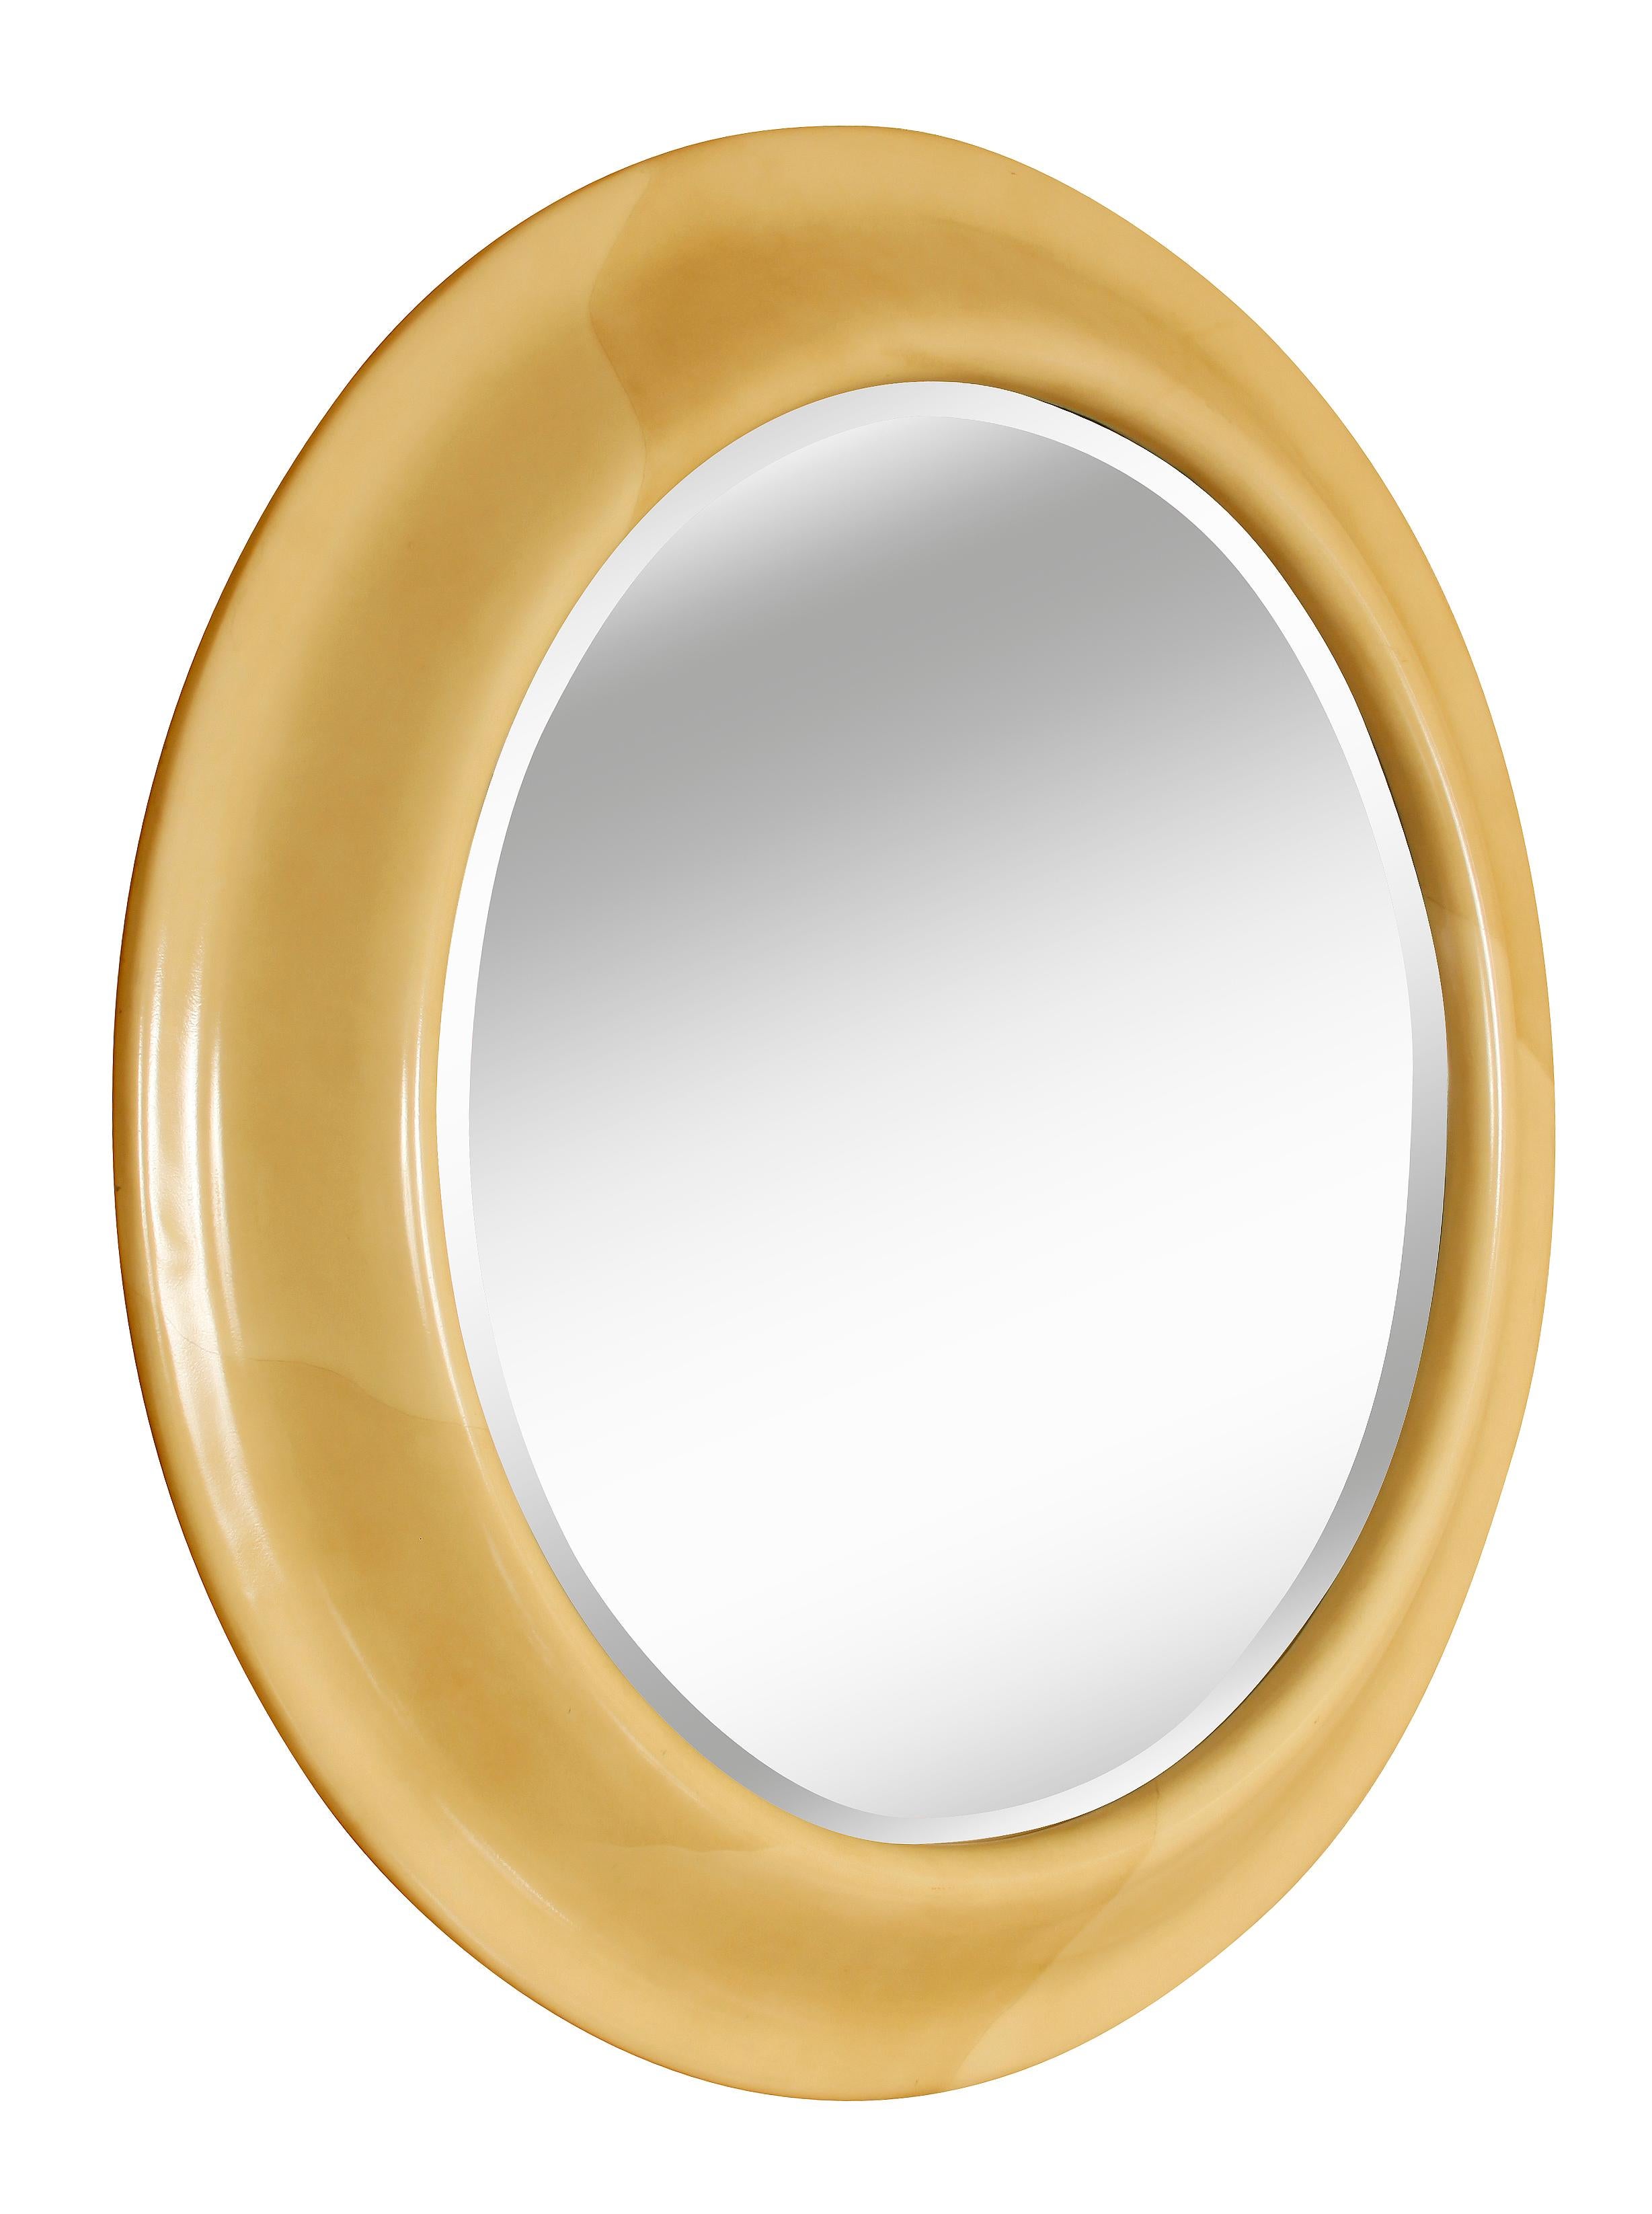 Large goatskin round mirror.